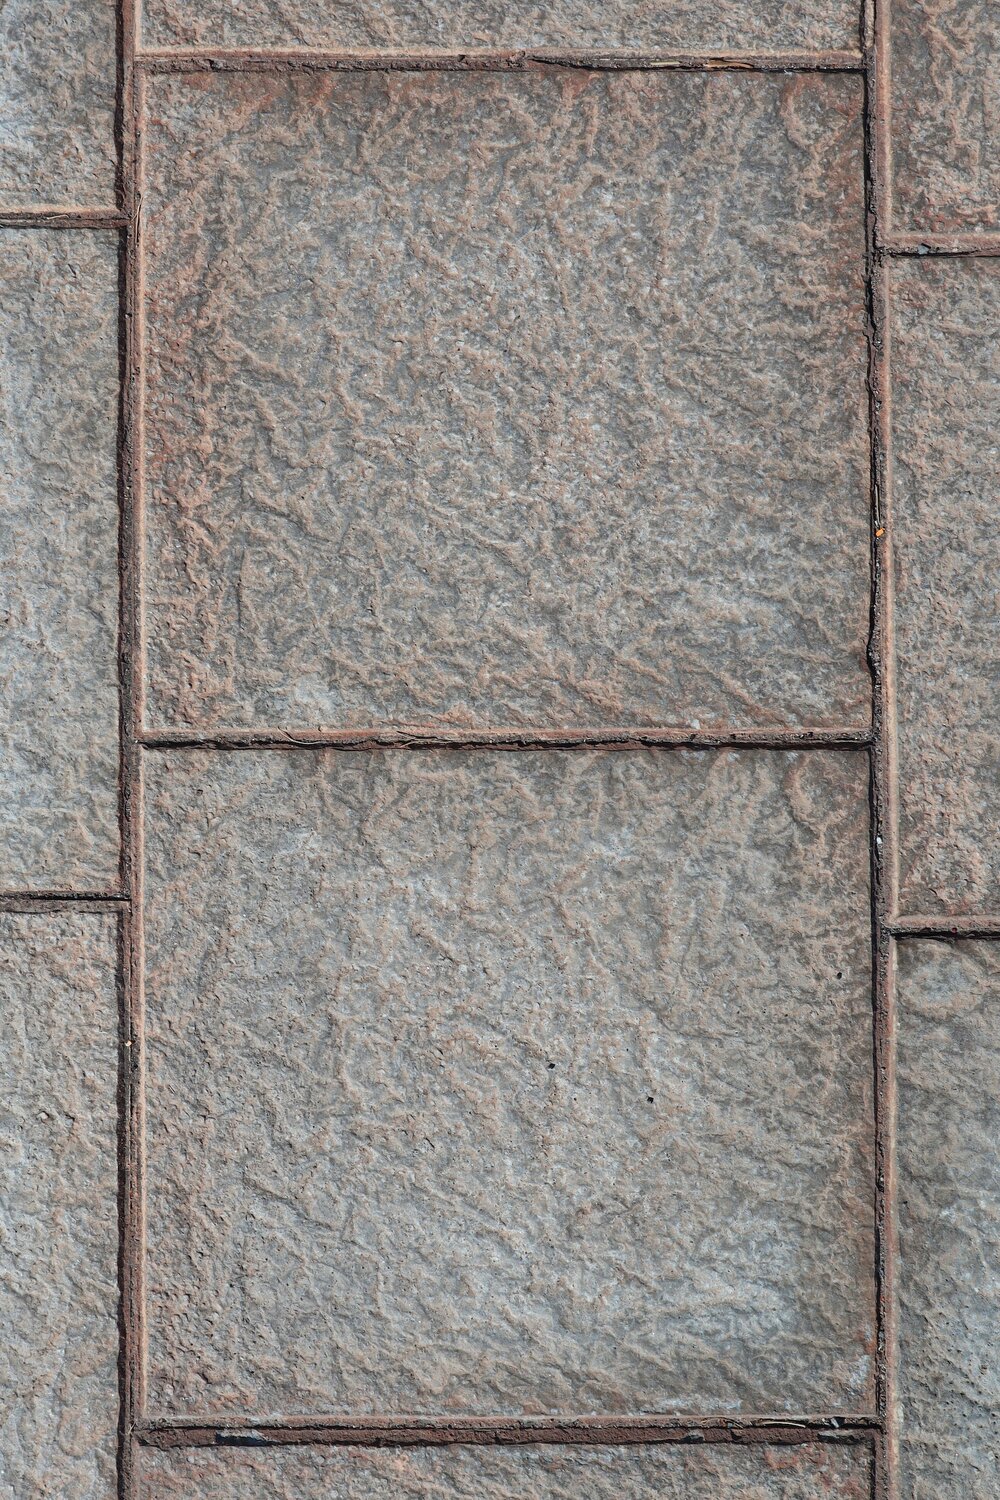 Example of plain stone tile flooring